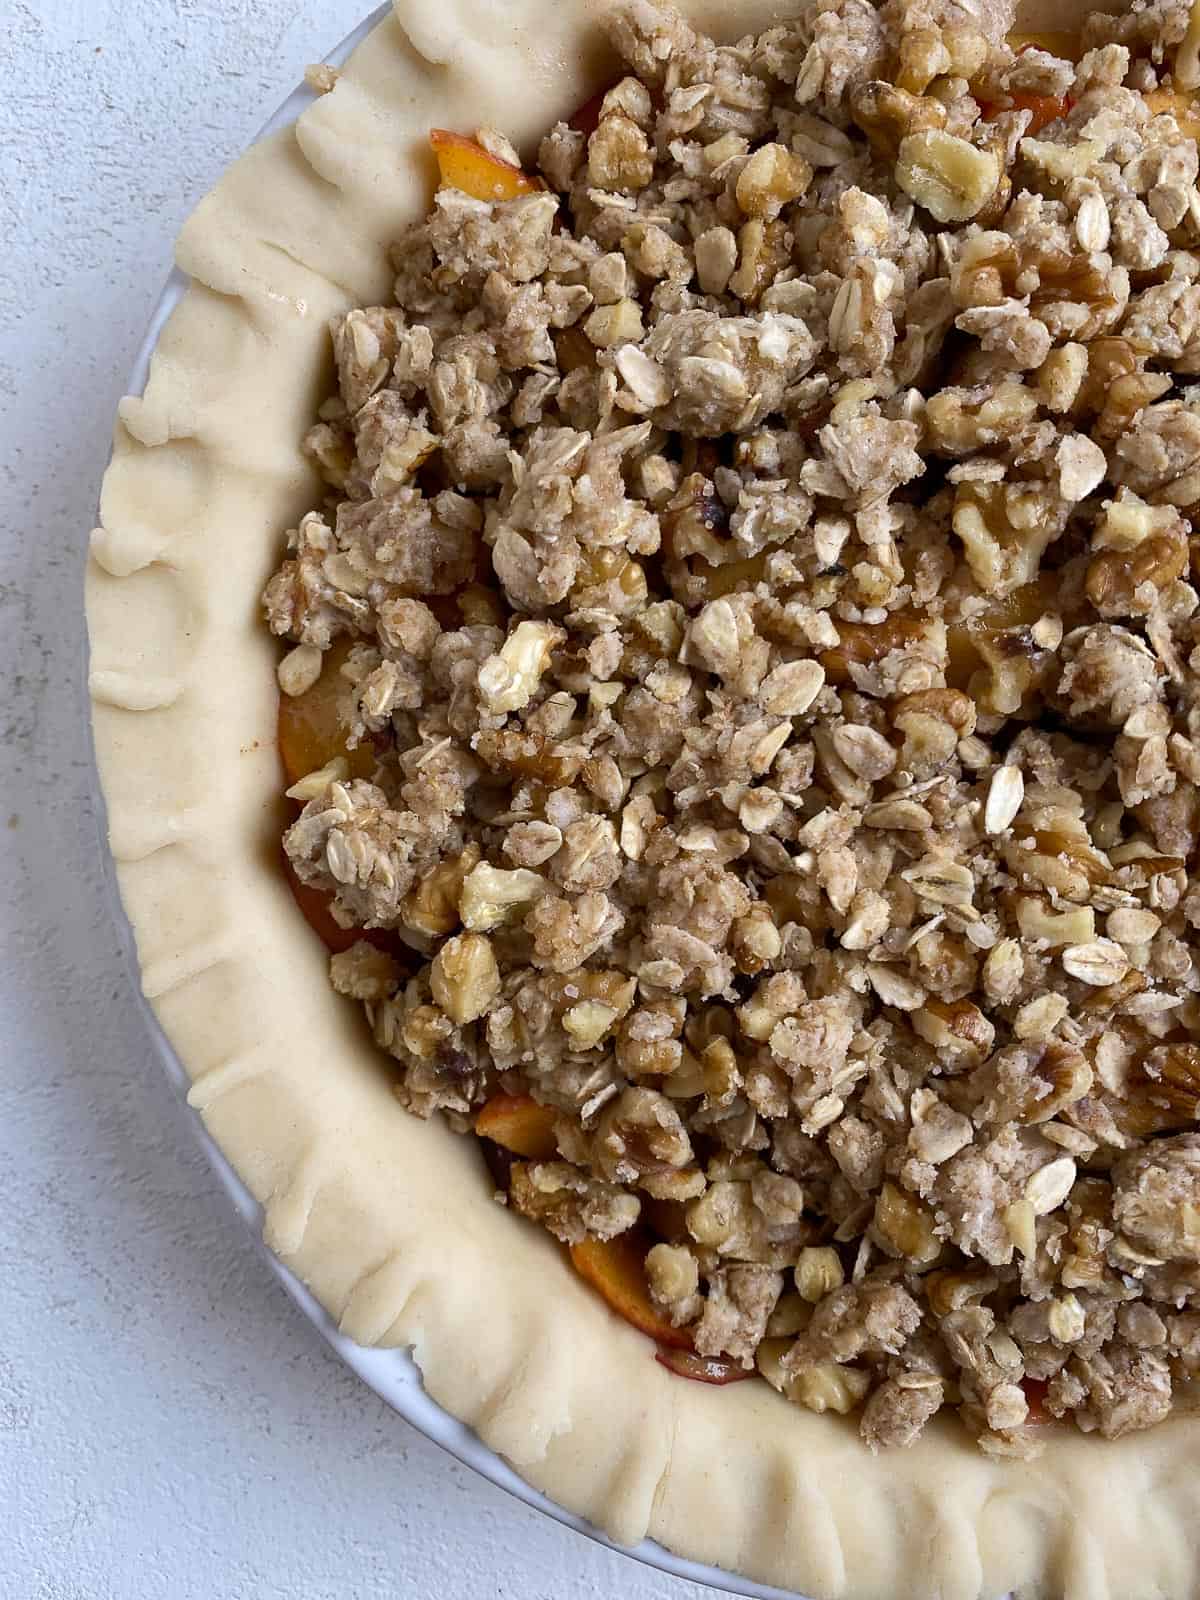 pre-baked peach crumb pie against a white surface